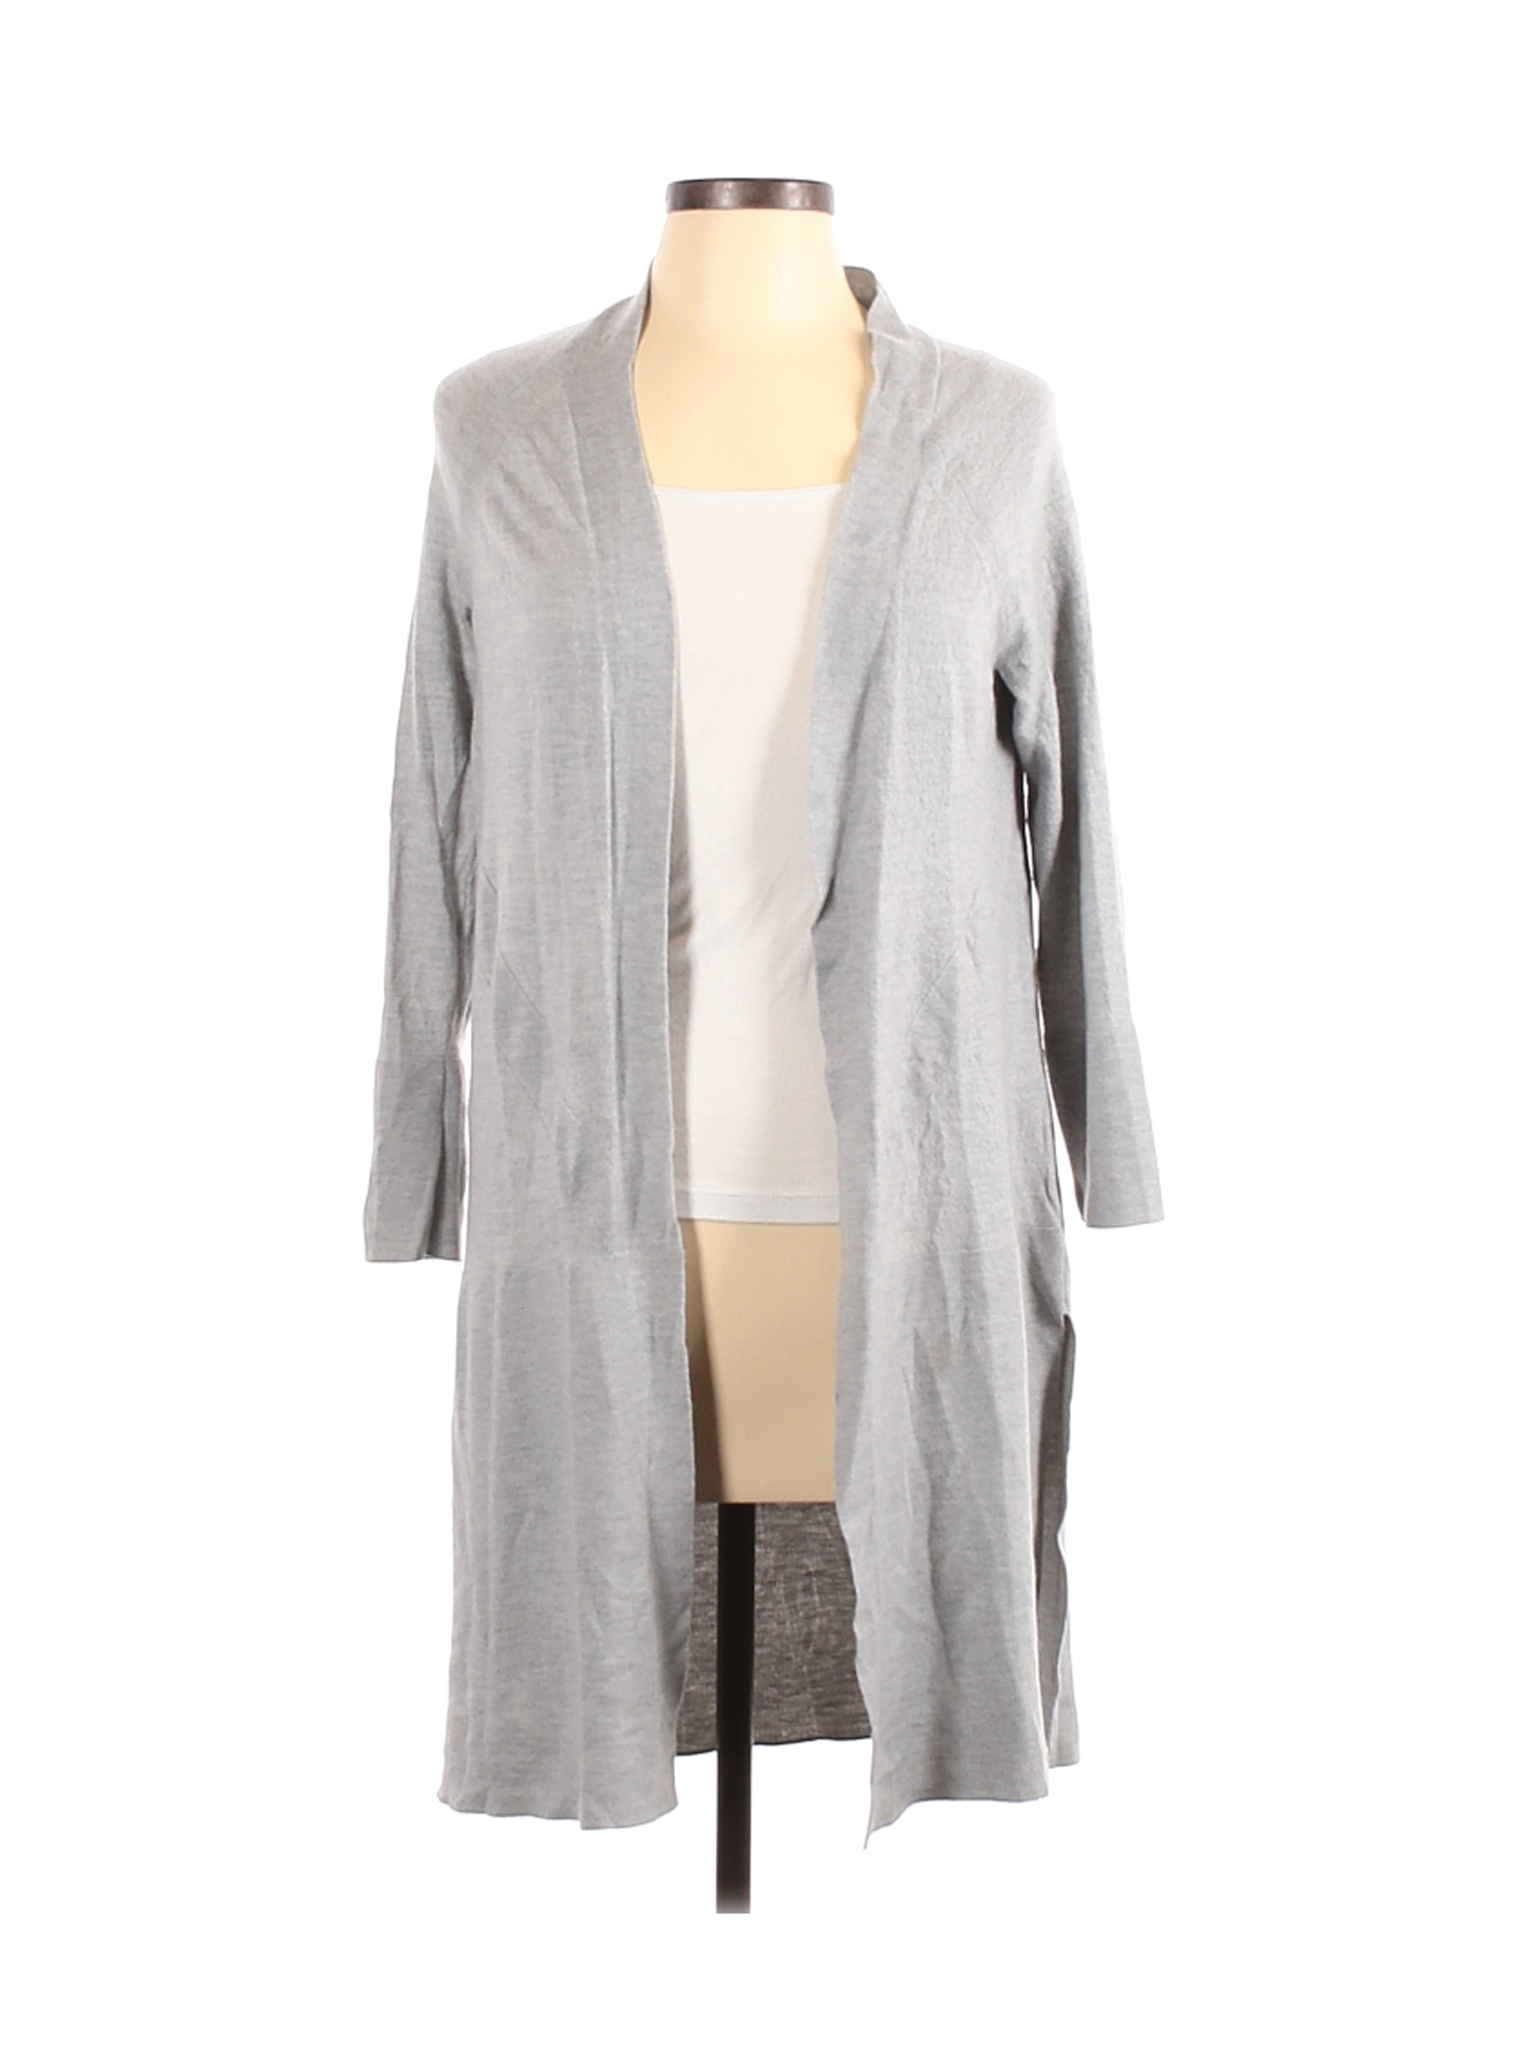 Talbots Women Gray Wool Cardigan L | eBay